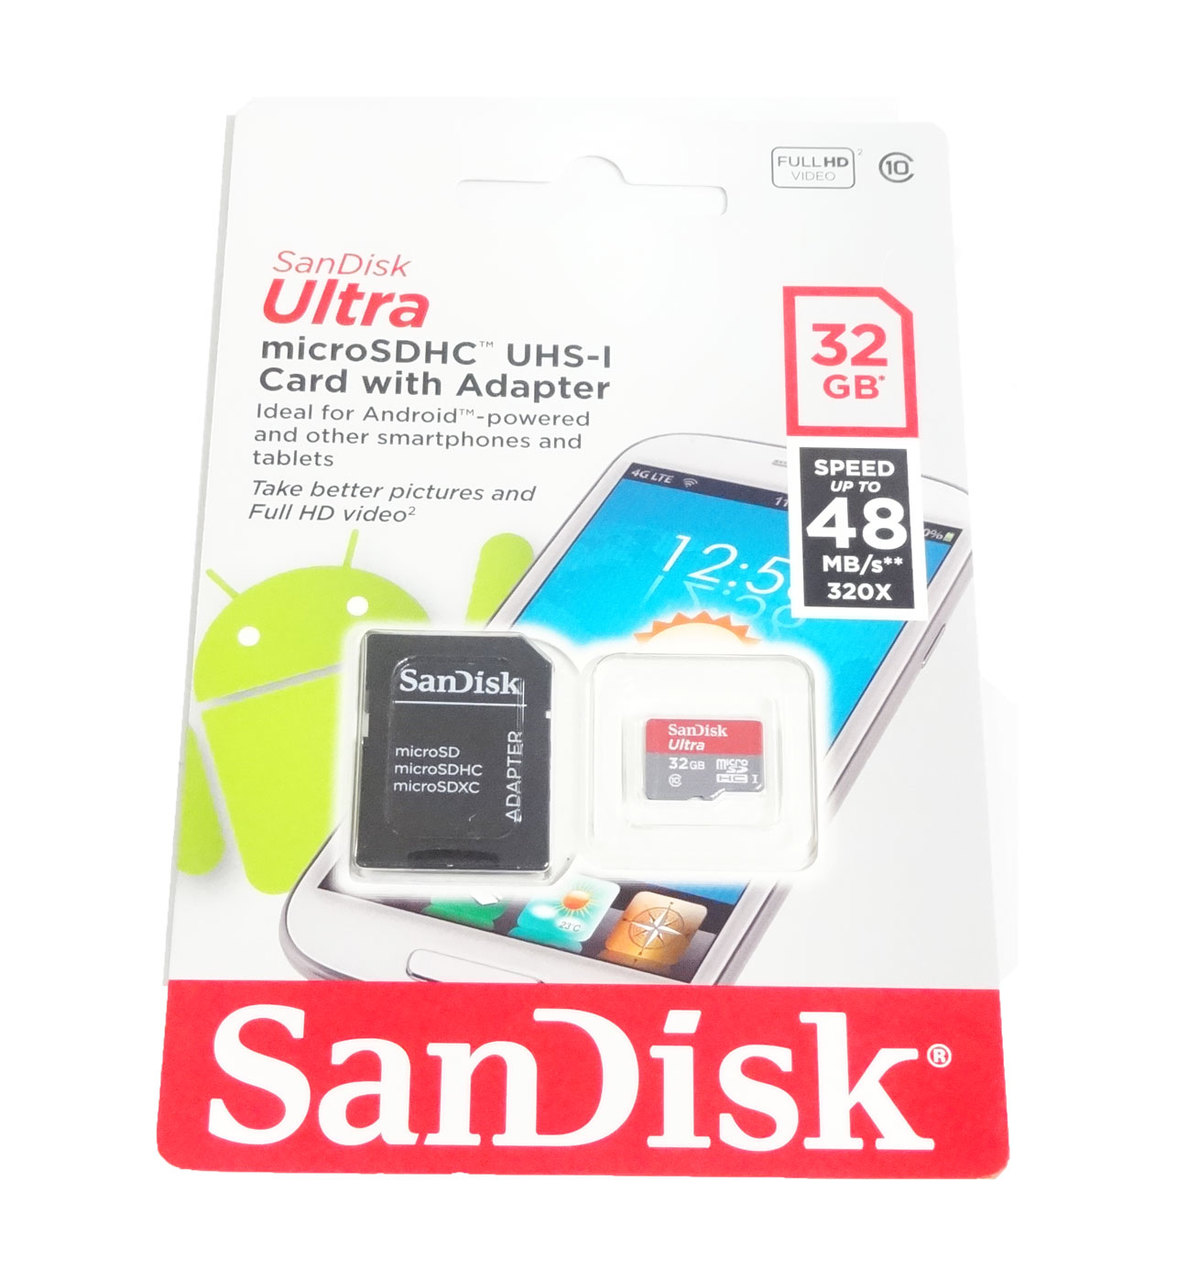 Sandisk MicroSD 32 GB